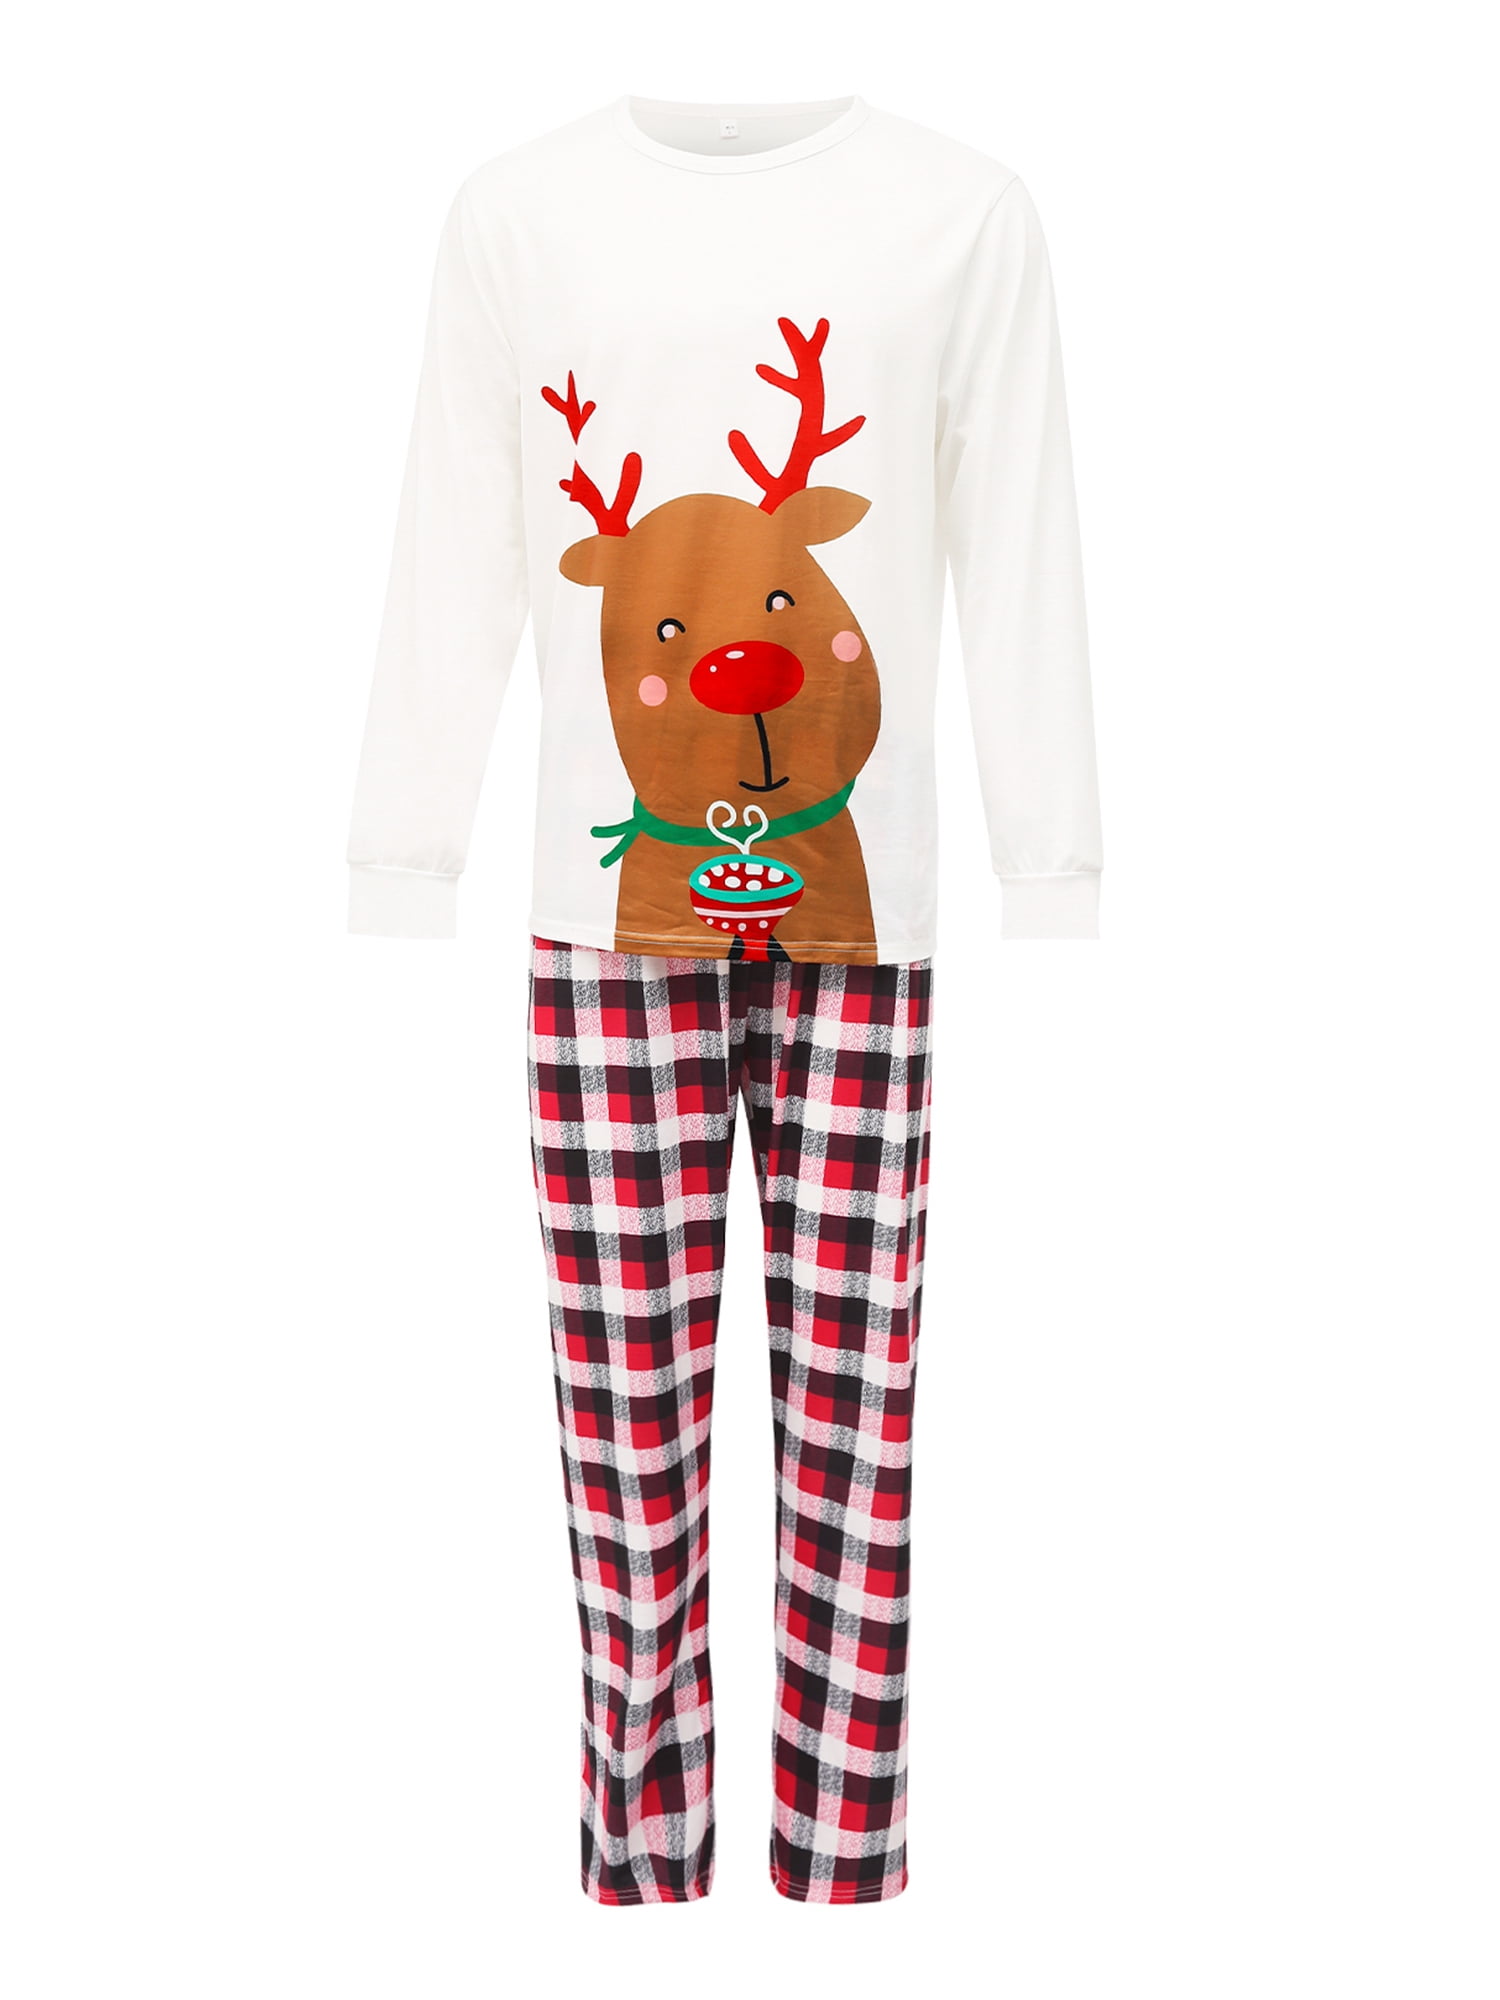 Details about   Family Christmas  Deer Pajamas Set Long Sleeve Tops+Pants Adults Kids Nightwear 